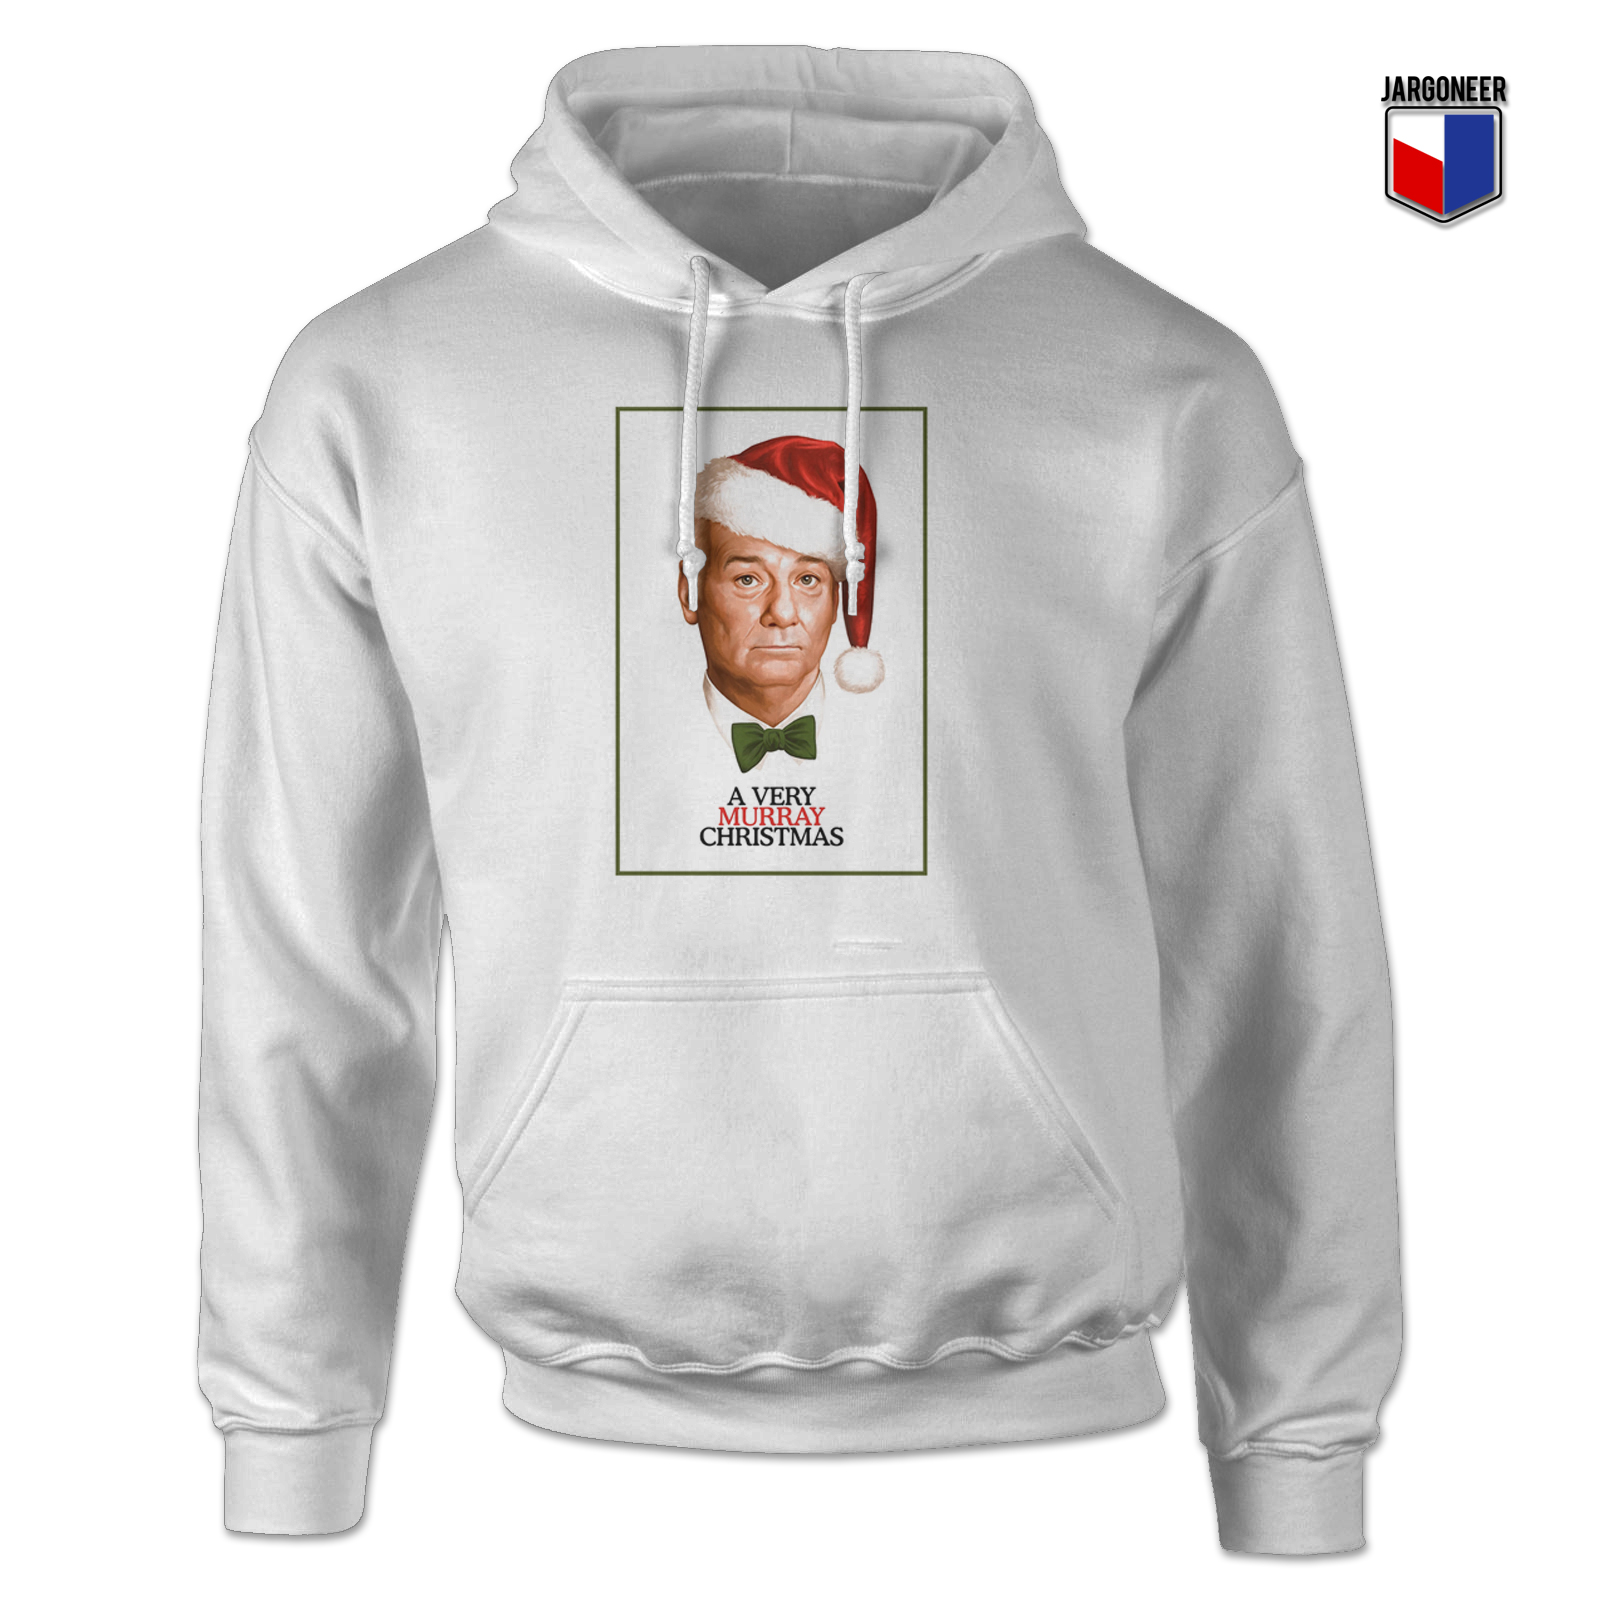 Merry Christmas Bill Murray Hoodie - Shop Unique Graphic Cool Shirt Designs